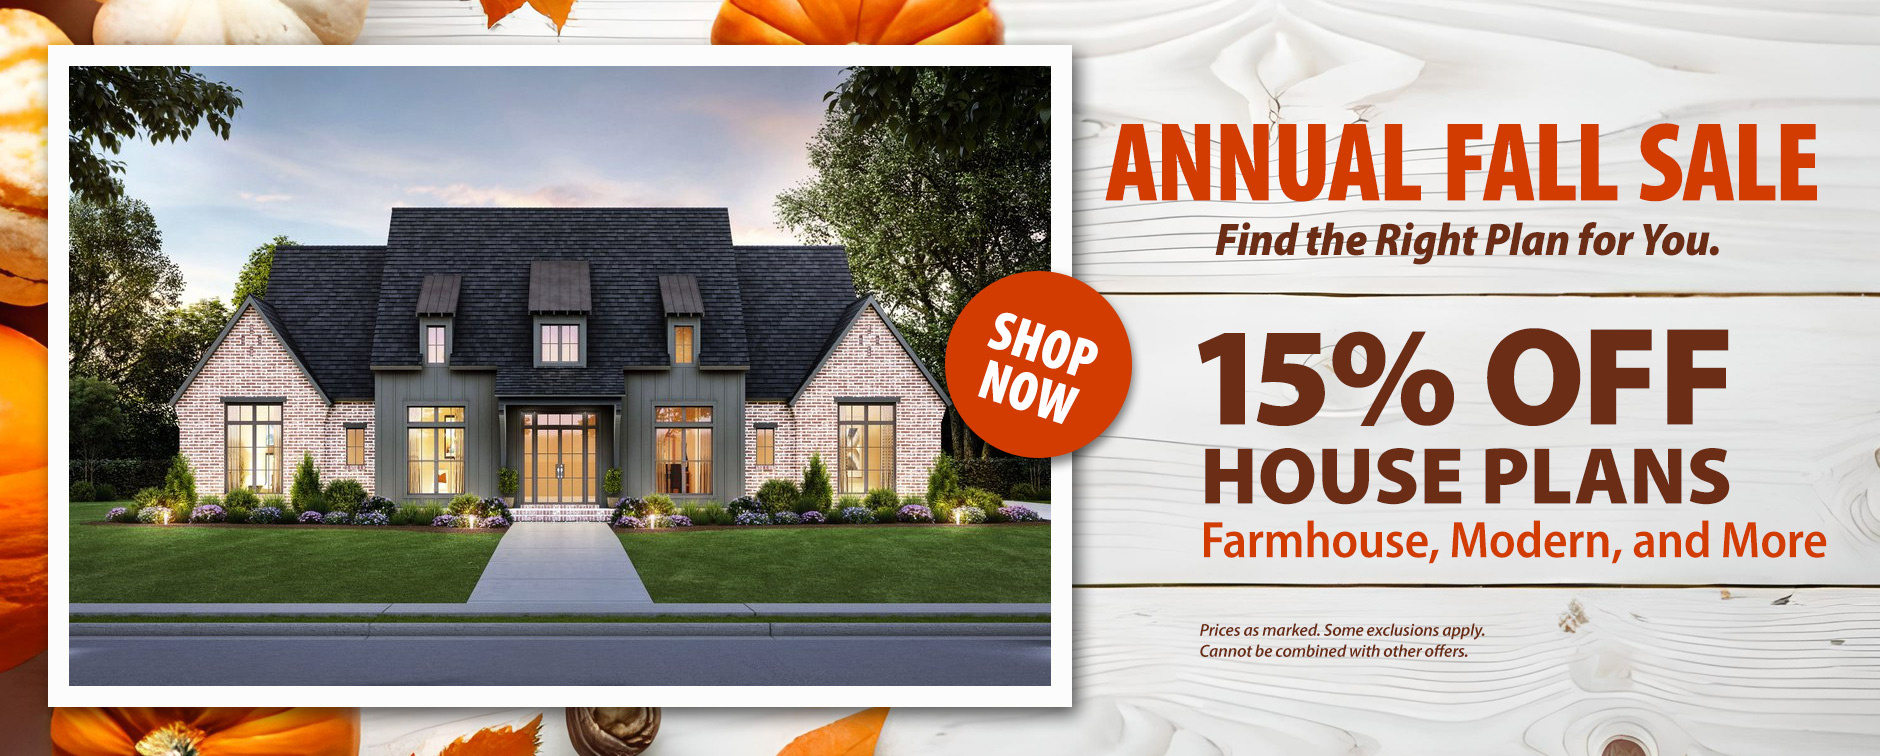 Get 15% Off Dream House Plans - Farmhouse, Modern, More